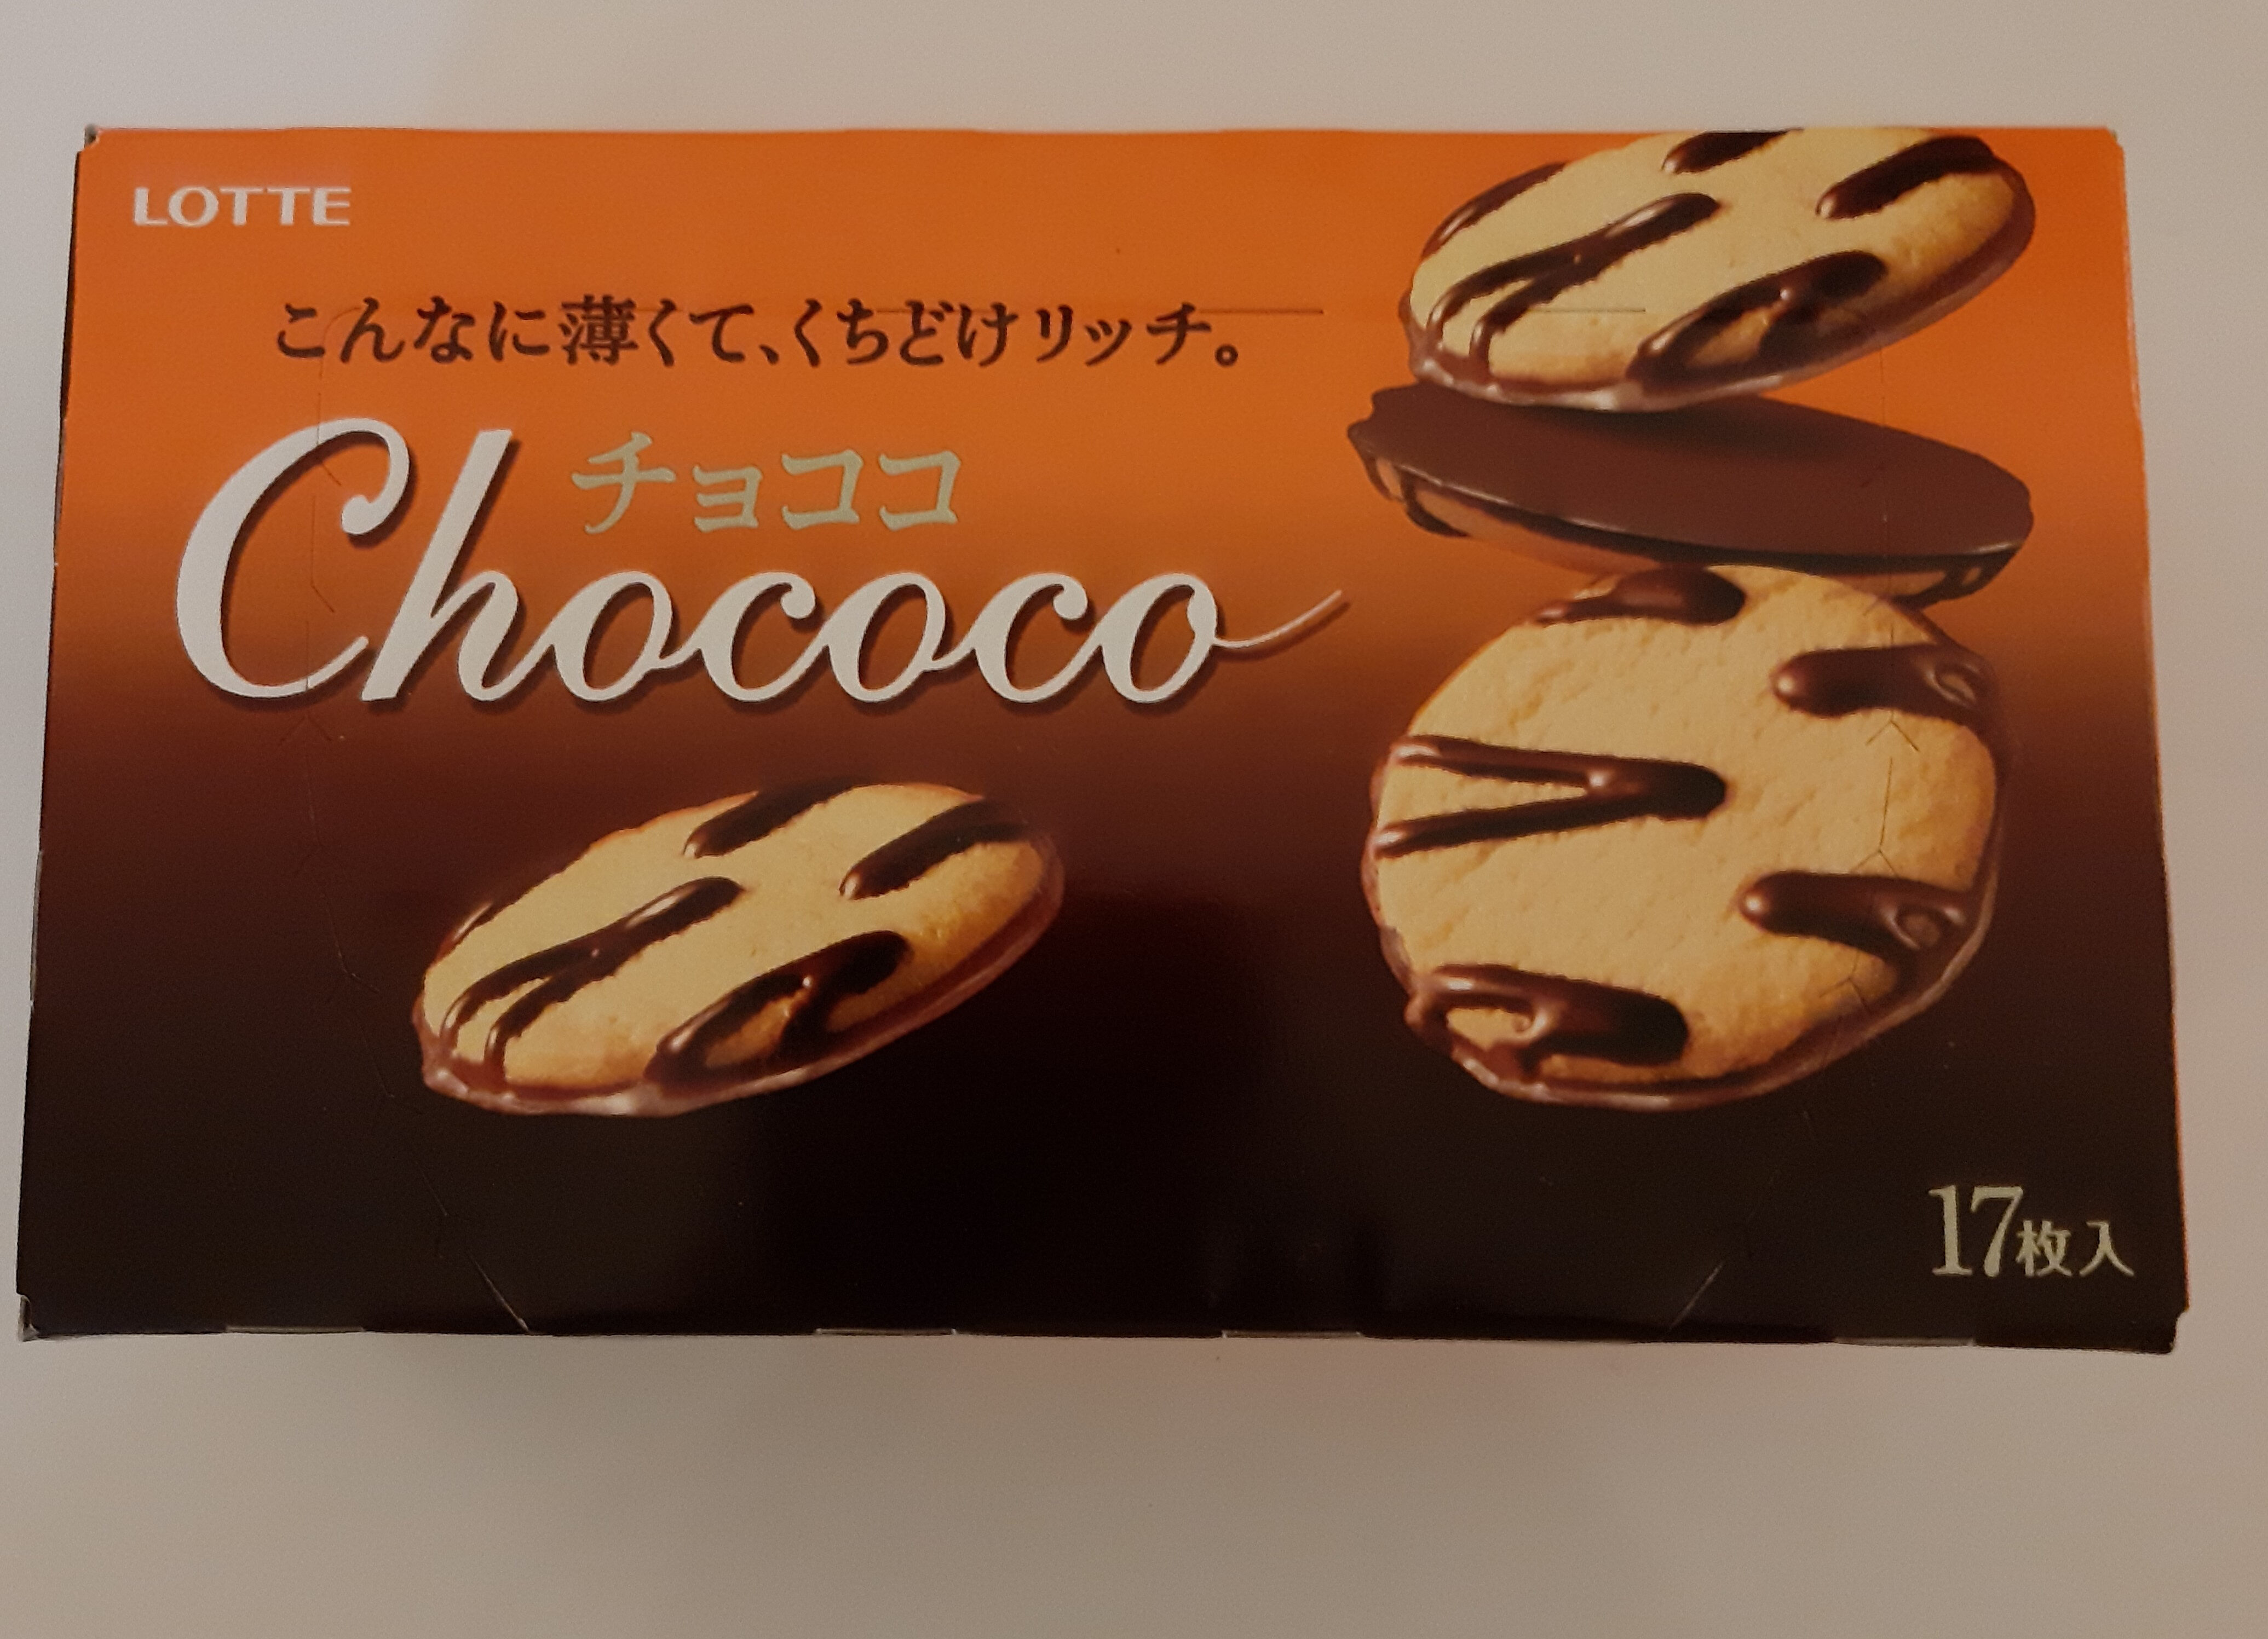 Chococo - Product - ja